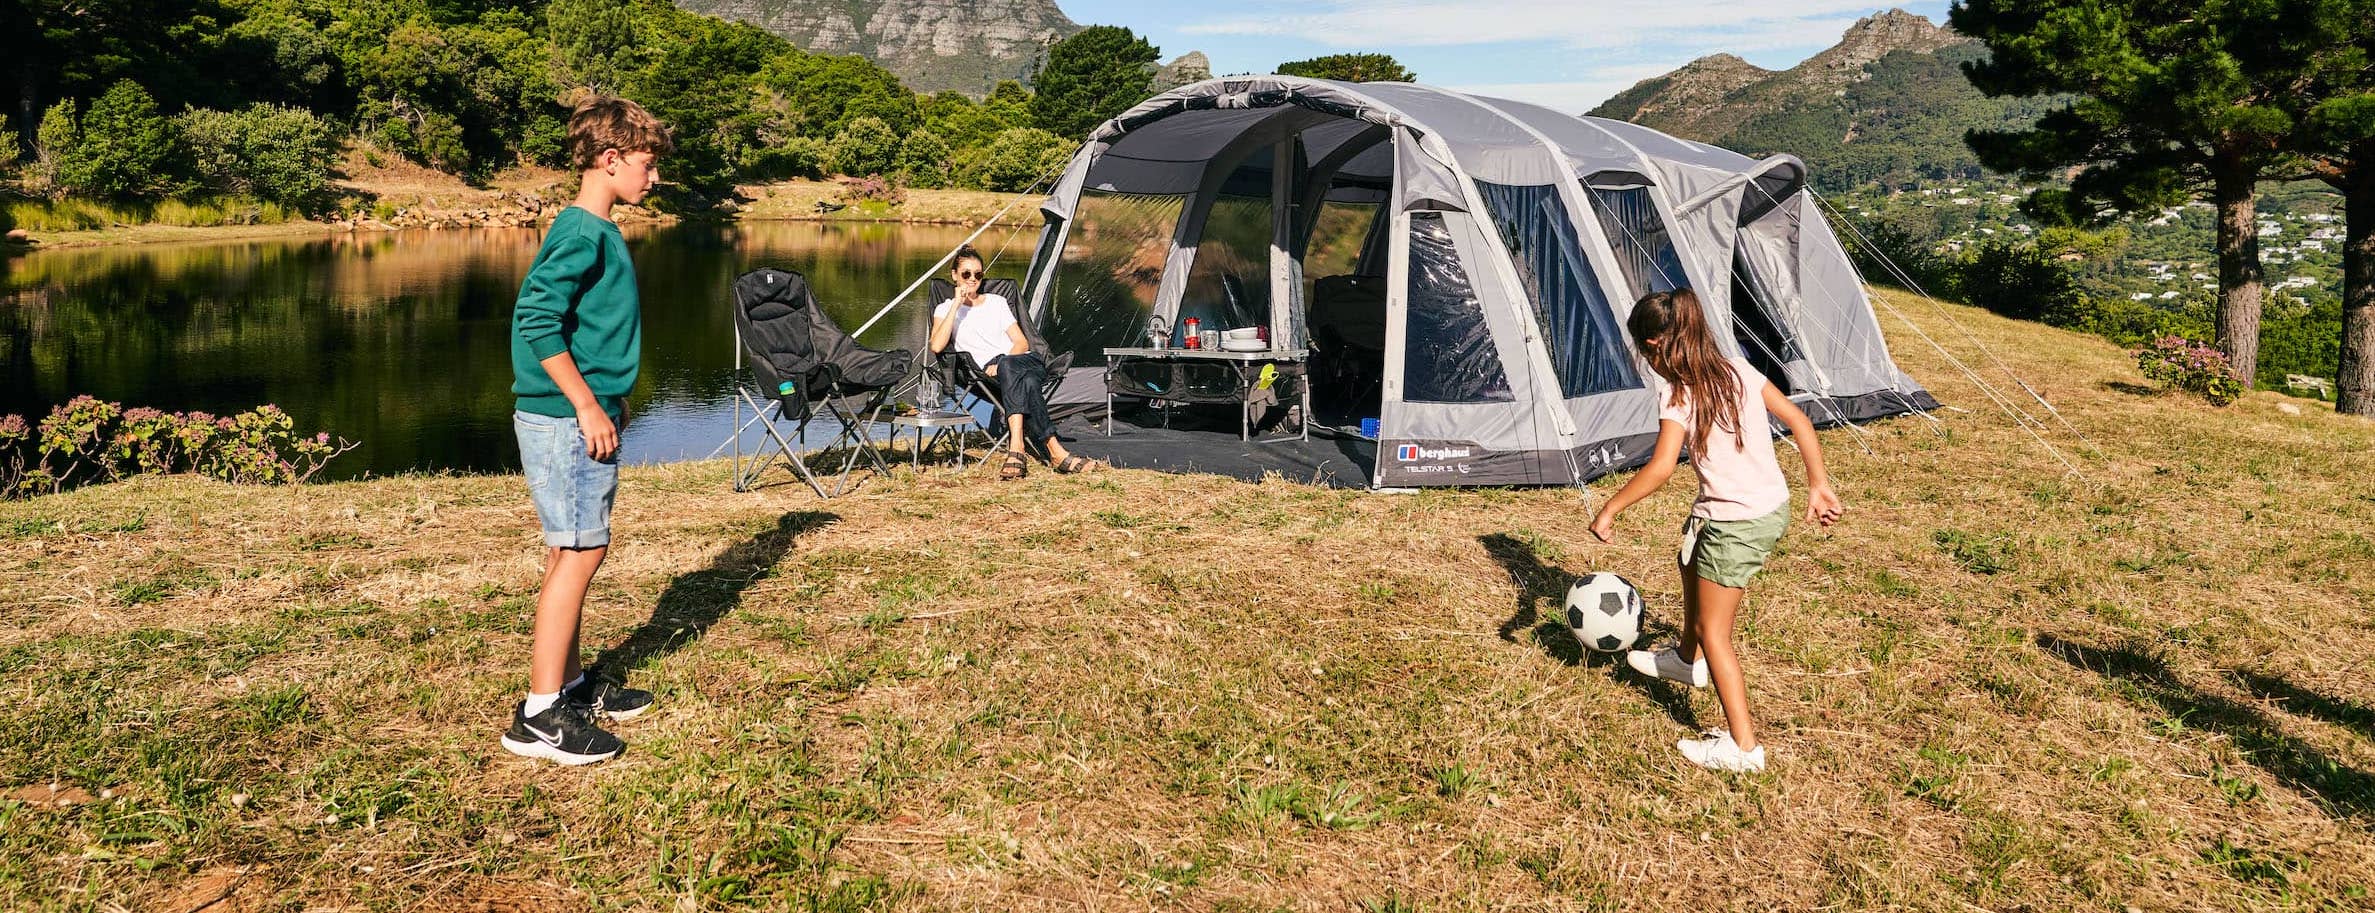 Go outdoors berghaus tent 1